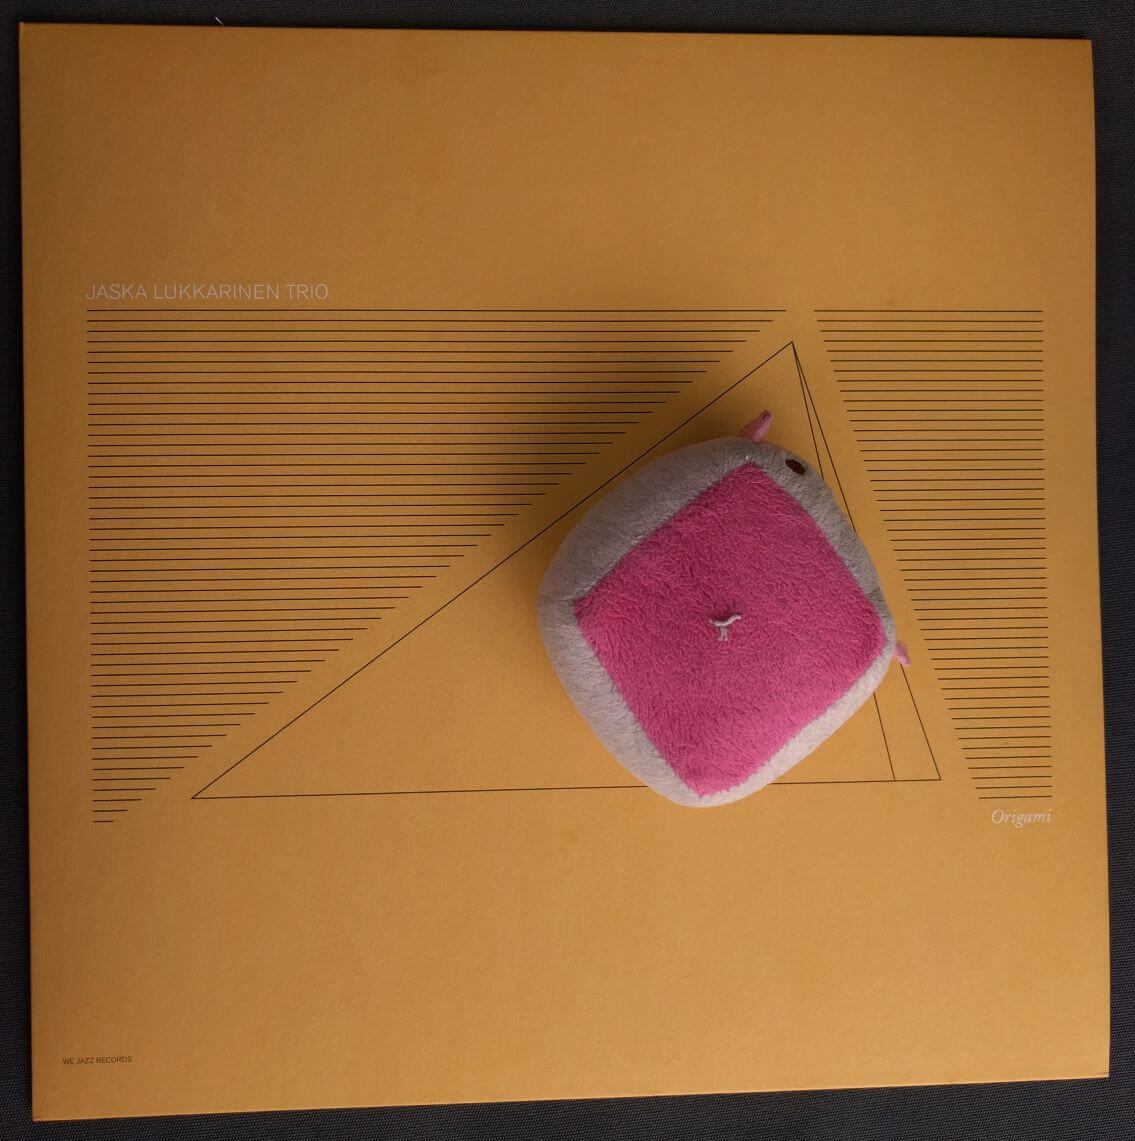 Jaska Lukkarinen Trio – Origami